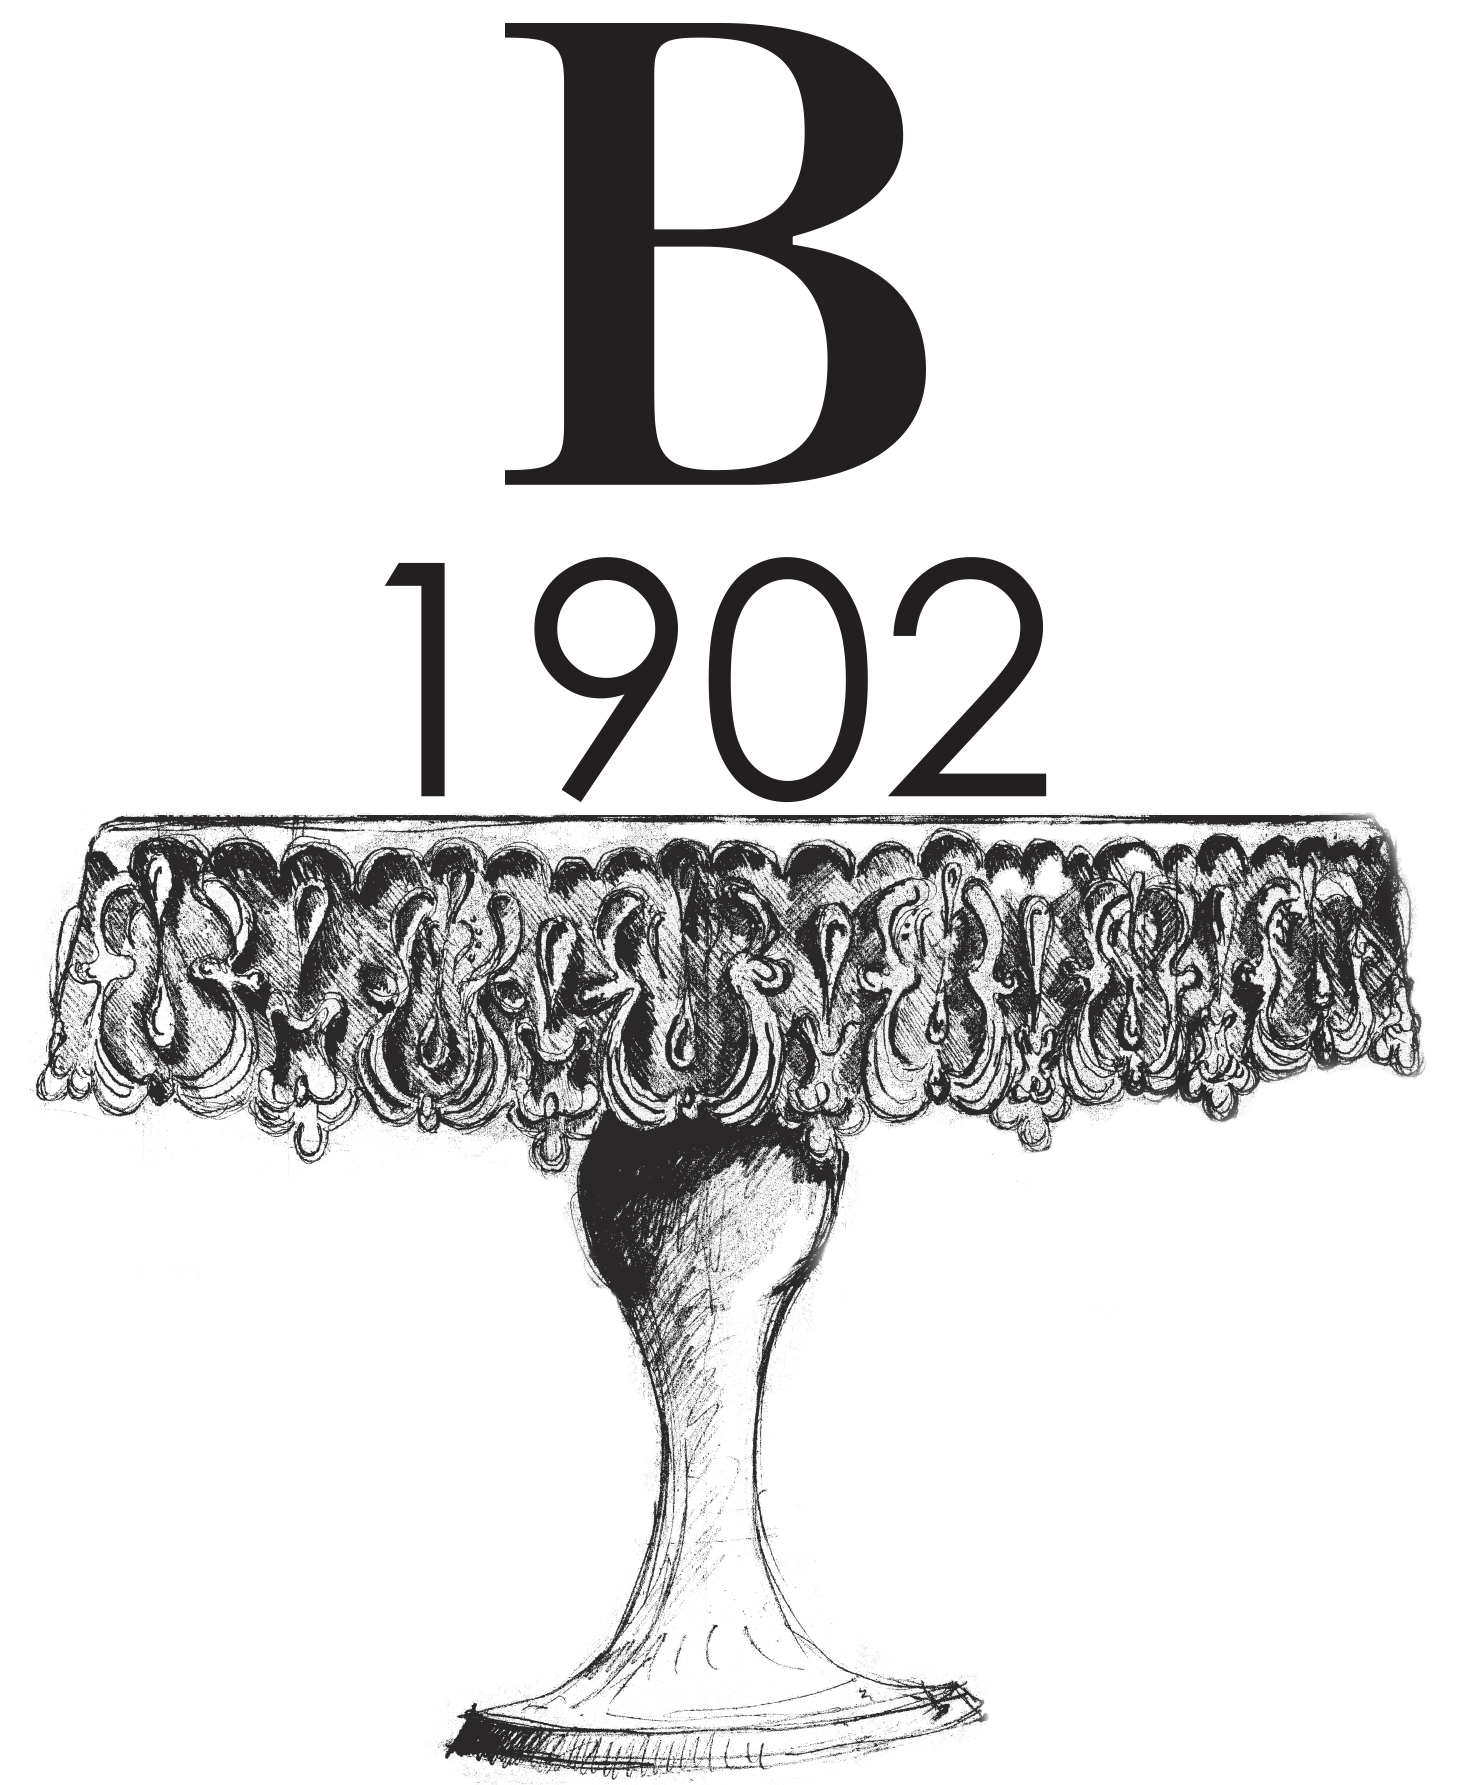 Alzatina Borsari con B 1902